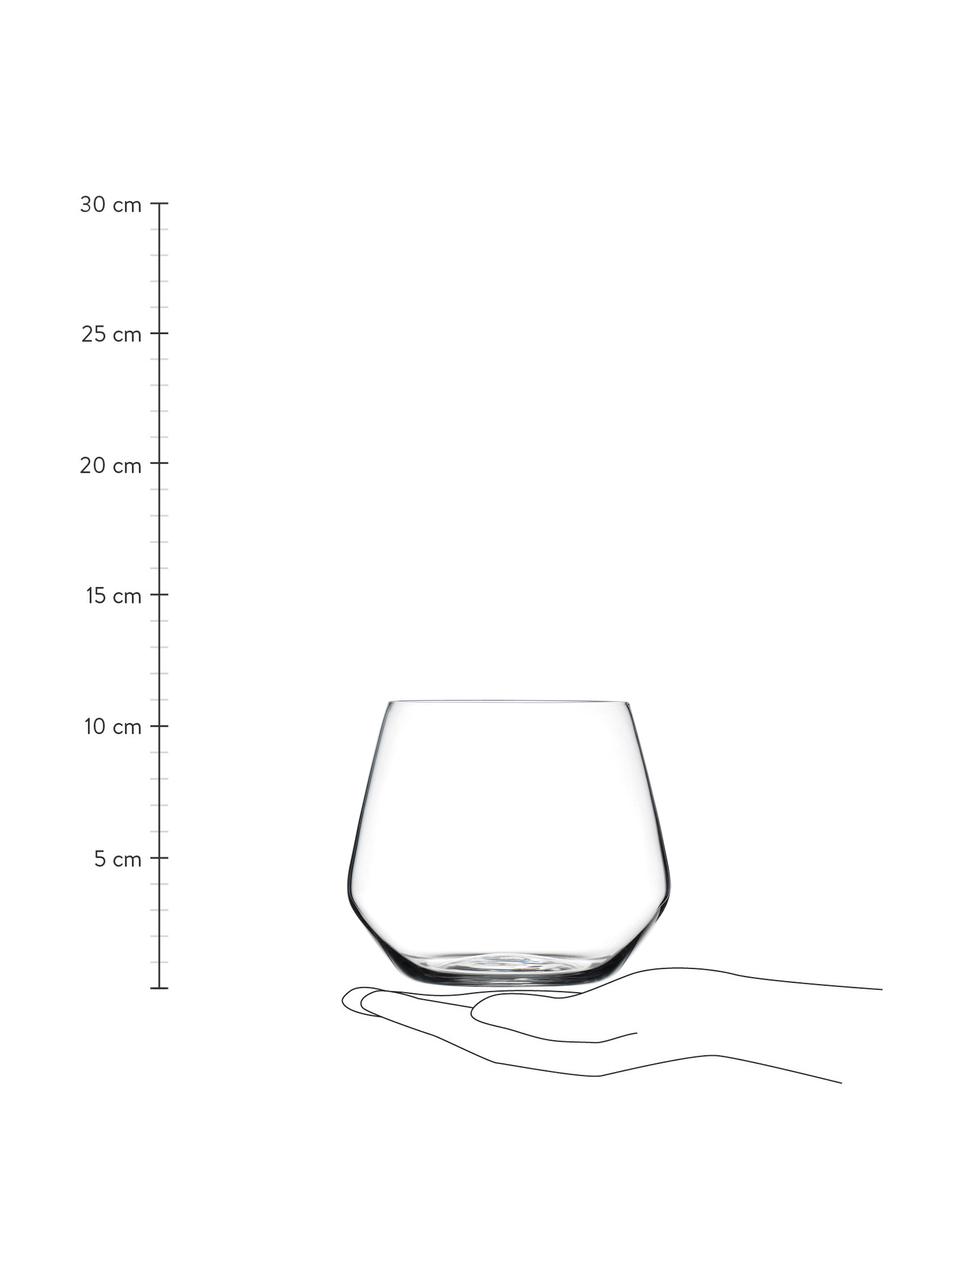 Kristall-Weinbecher Aria, 6 Stück, Kristallglas, Transparent, Ø 11 x H 9 cm, 550 ml